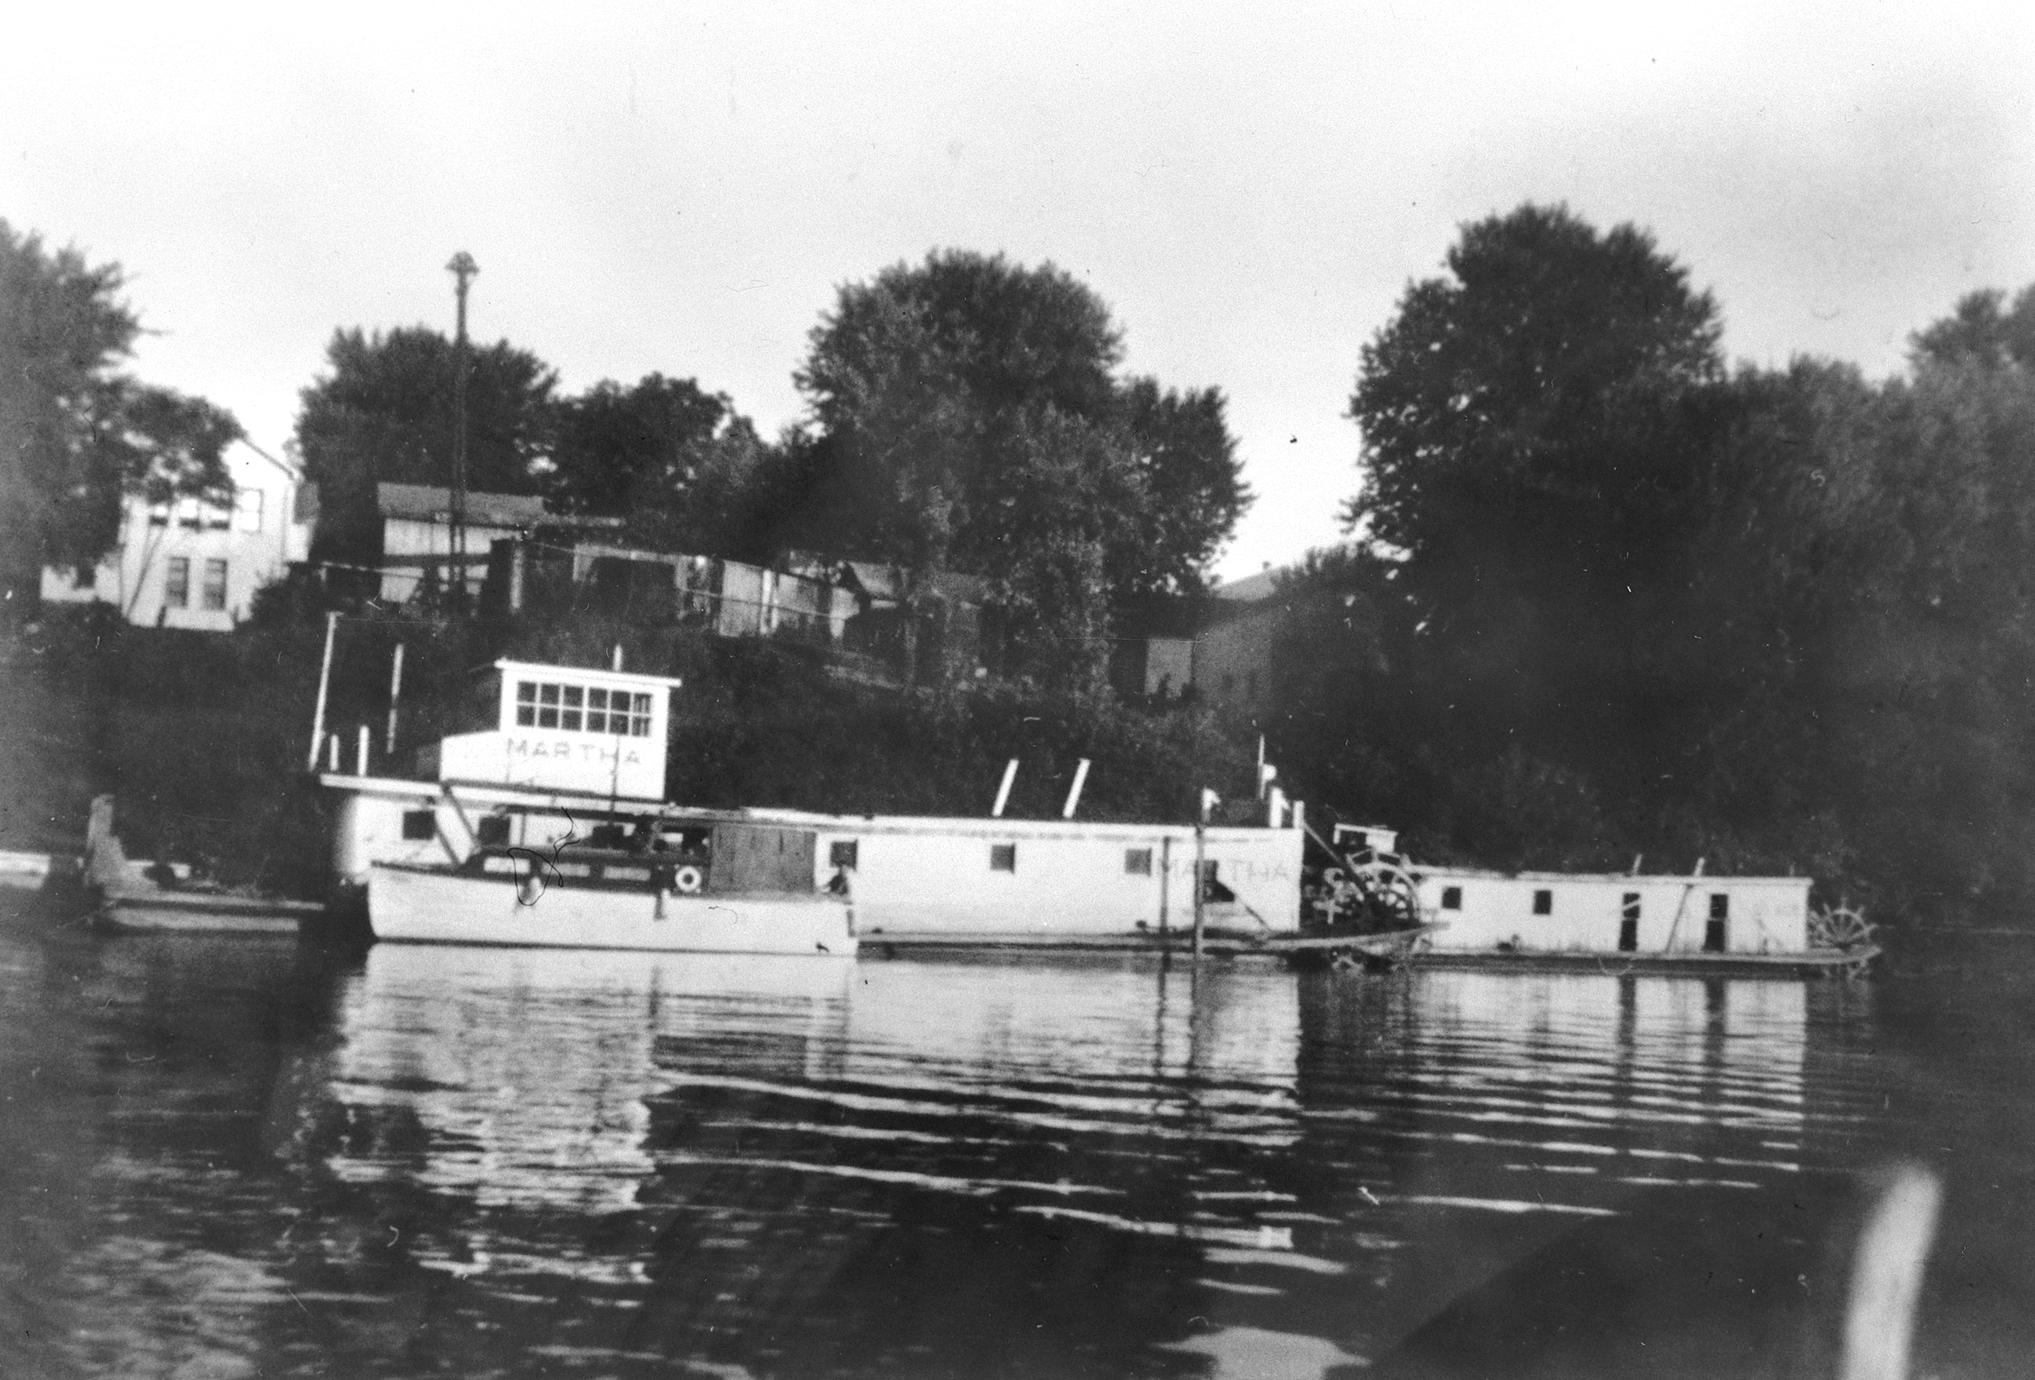 Martha (Towboat, 1924-1939)